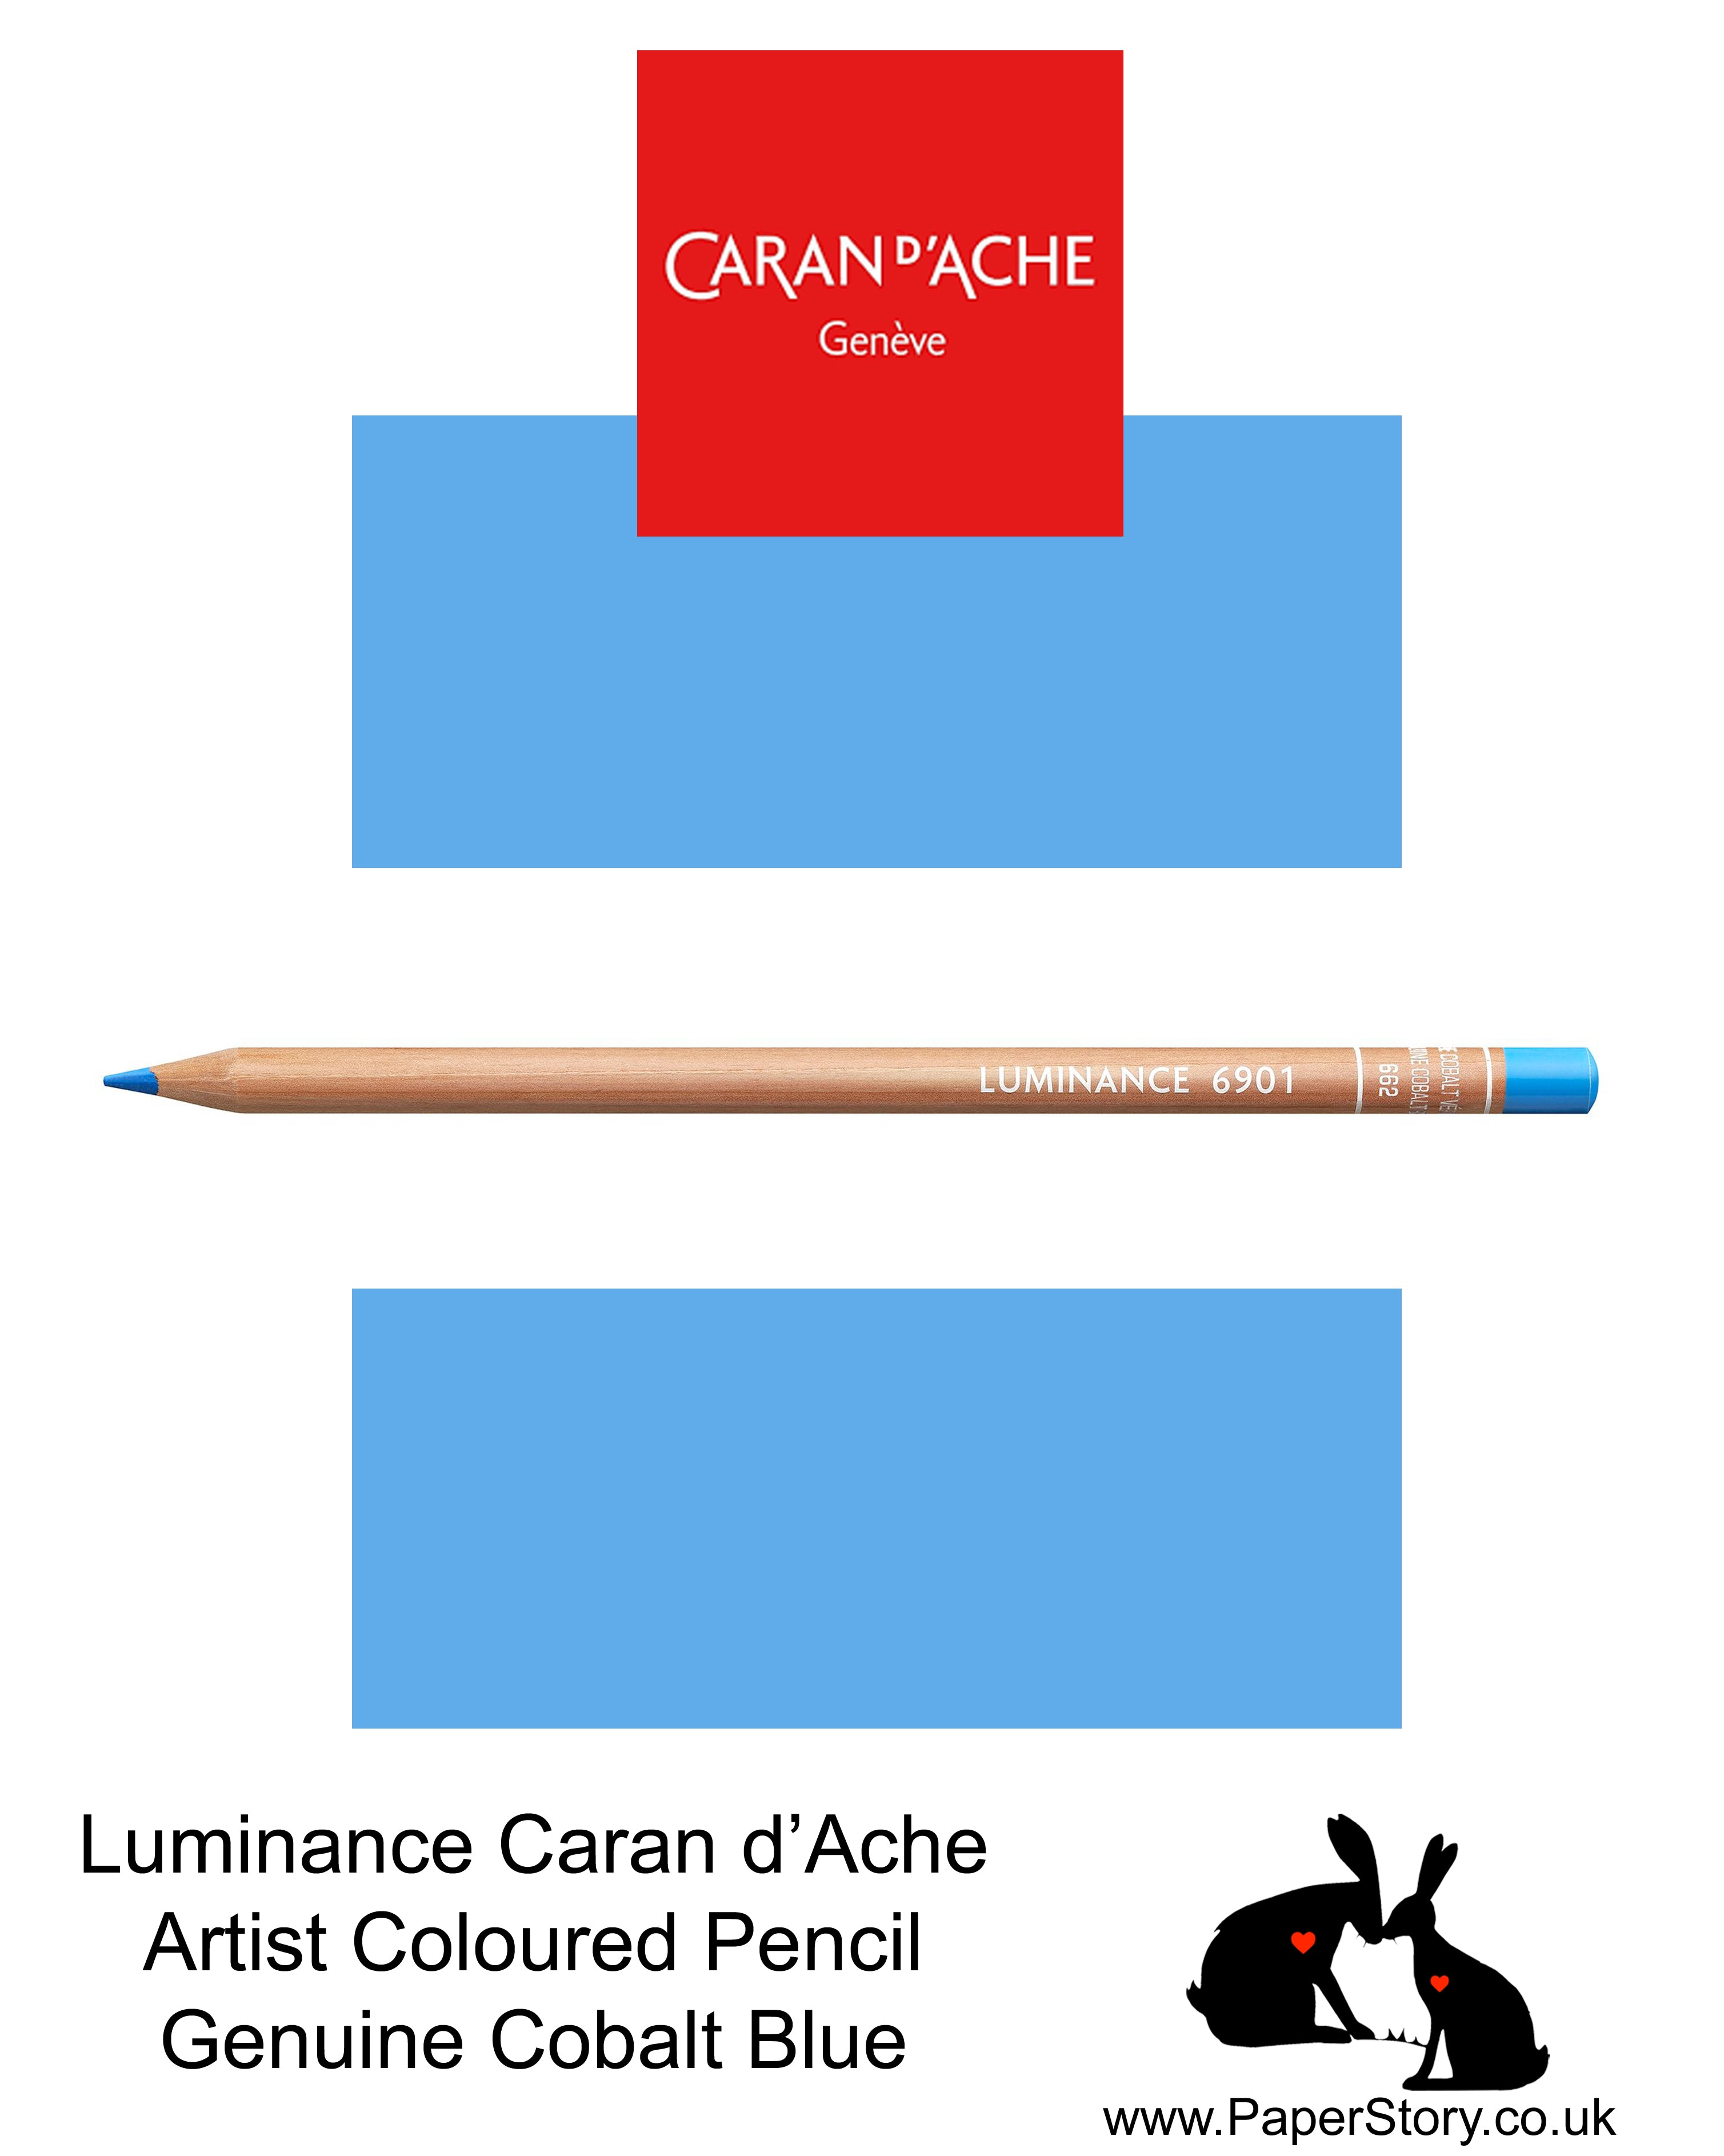 Caran d'Ache Luminance individual Artist Colour Pencils 6901 Genuine Cobalt Blue 662